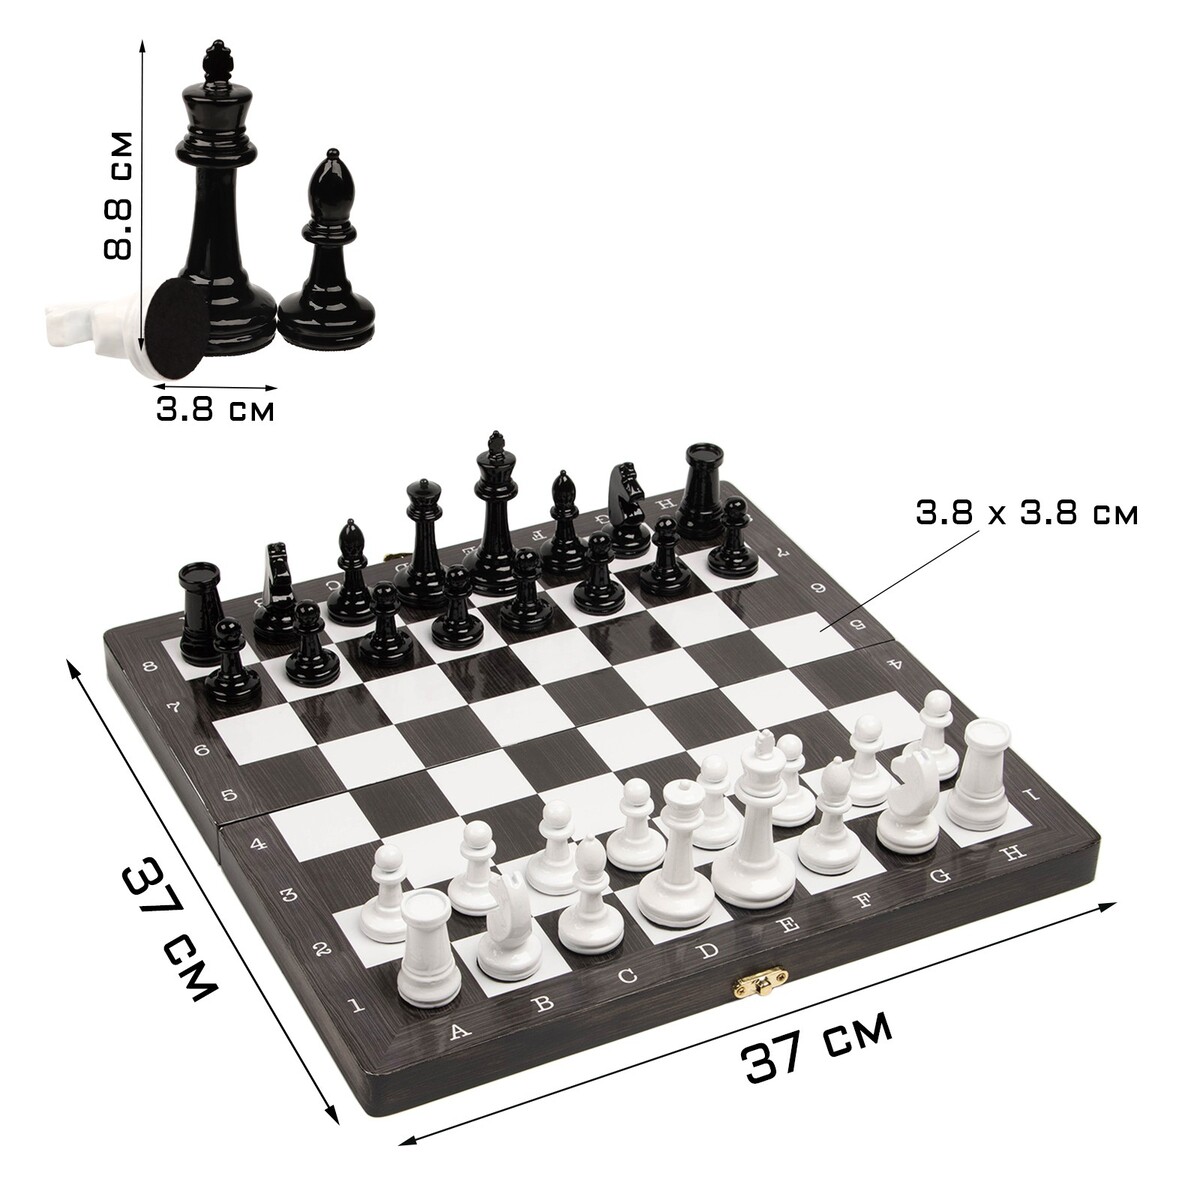 Шахматы турнирные 37 х 37 см, король h-8.8 см d-3.8 см, пешка h-4.2 см d-2.7 см, No brand